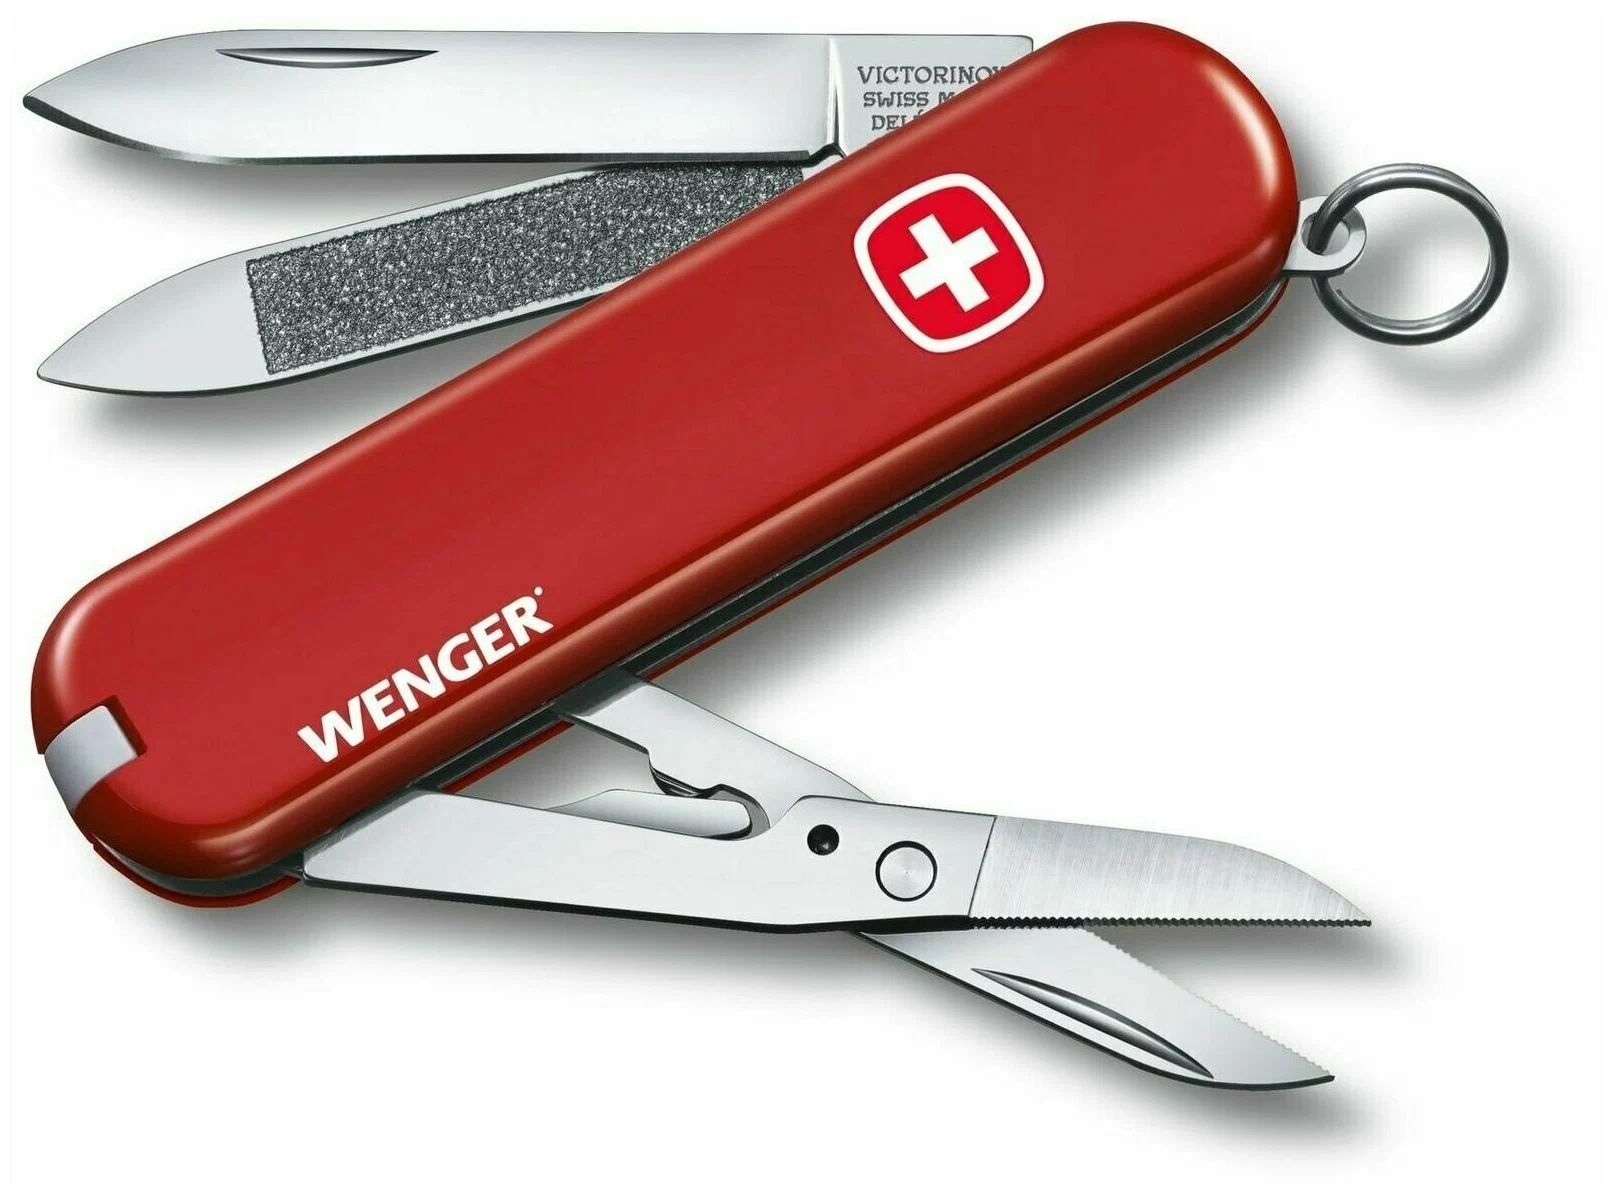 Нож Victorinox Wenger, 65 мм, 7 функций, красный 0.6423.91 нож victorinox electrician 93 мм 7 функций серебристый